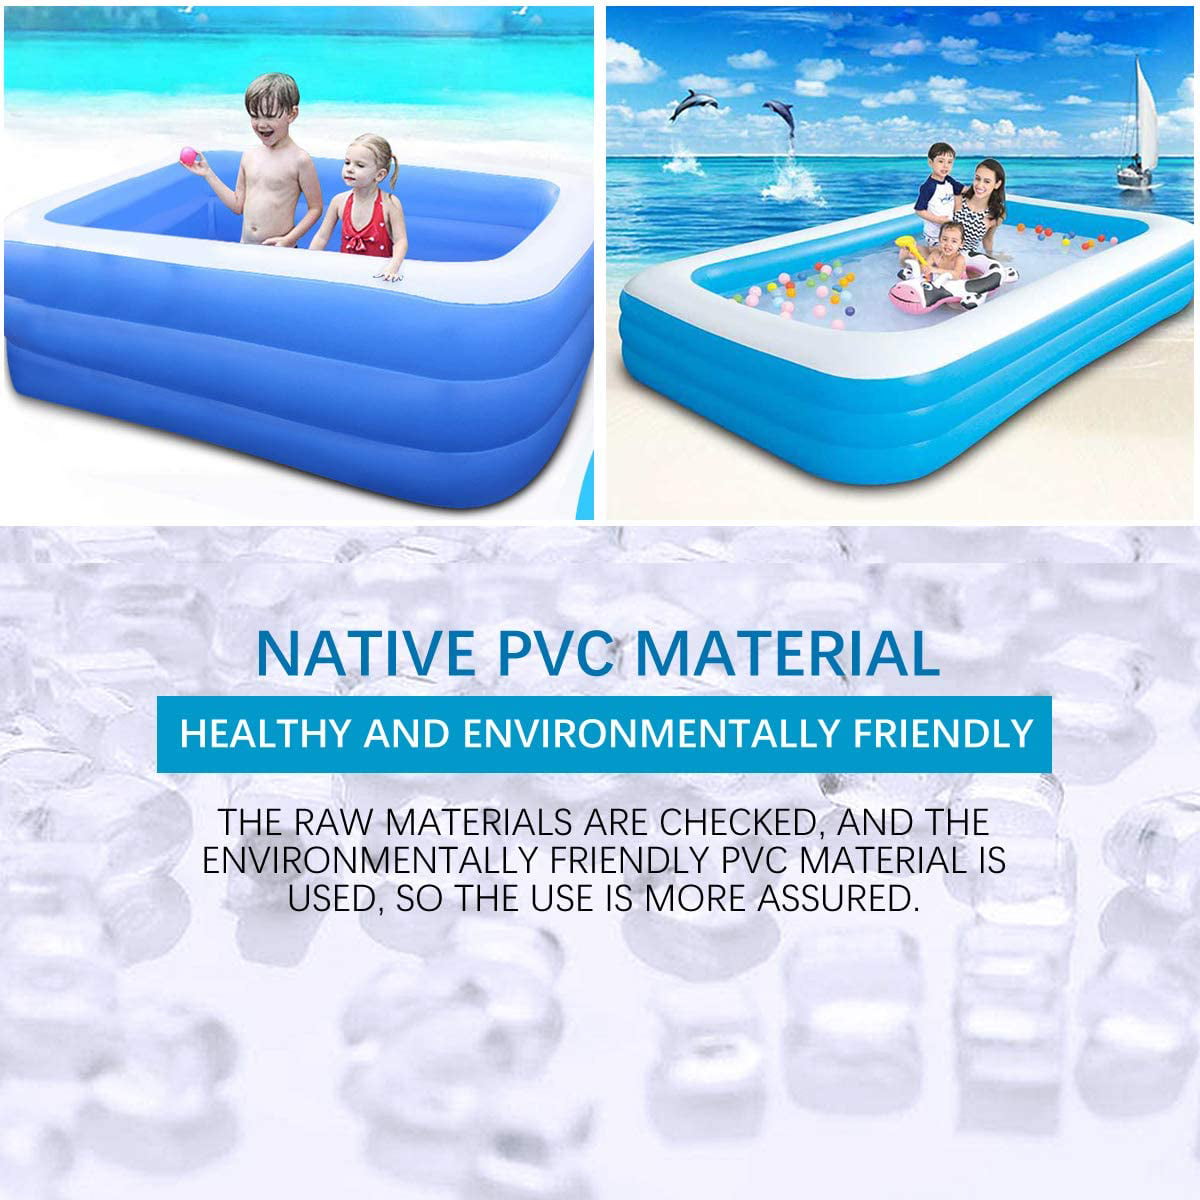 HOBFU Inflatable Pool Outdoor Family Swimming Pool Lounge Wading Pool Blue PVC Rectangular Pool for Garden,Backyard 